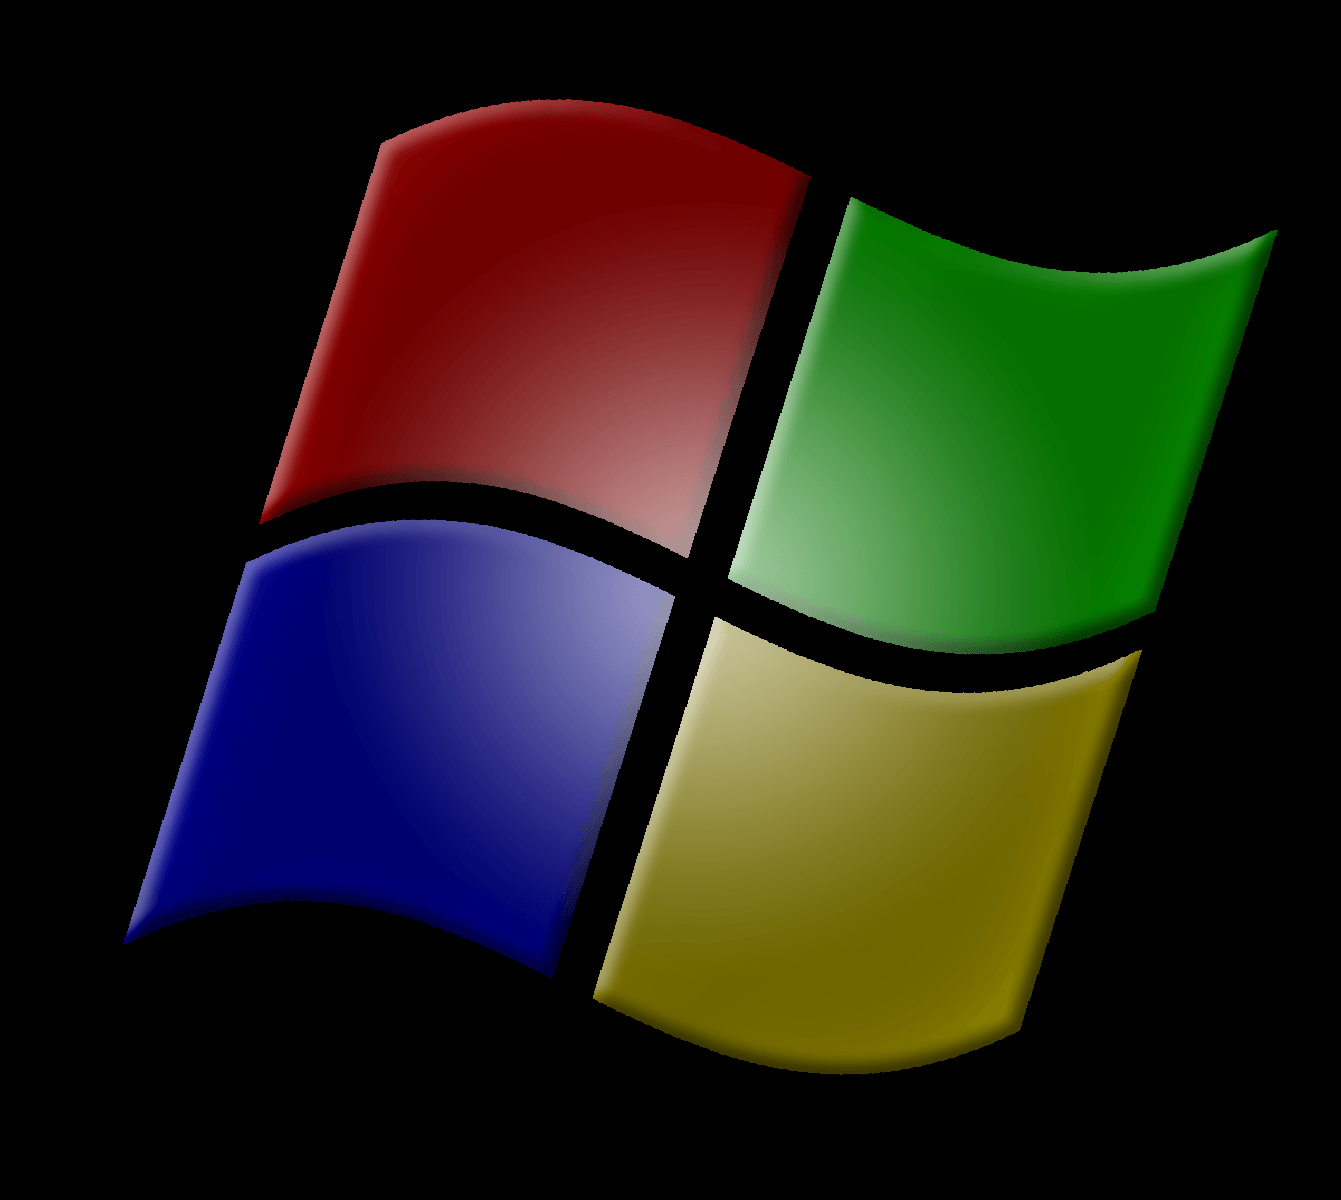 Dark Windows Logo - Windows Updates Released, patches items in Microsoft NET, windows